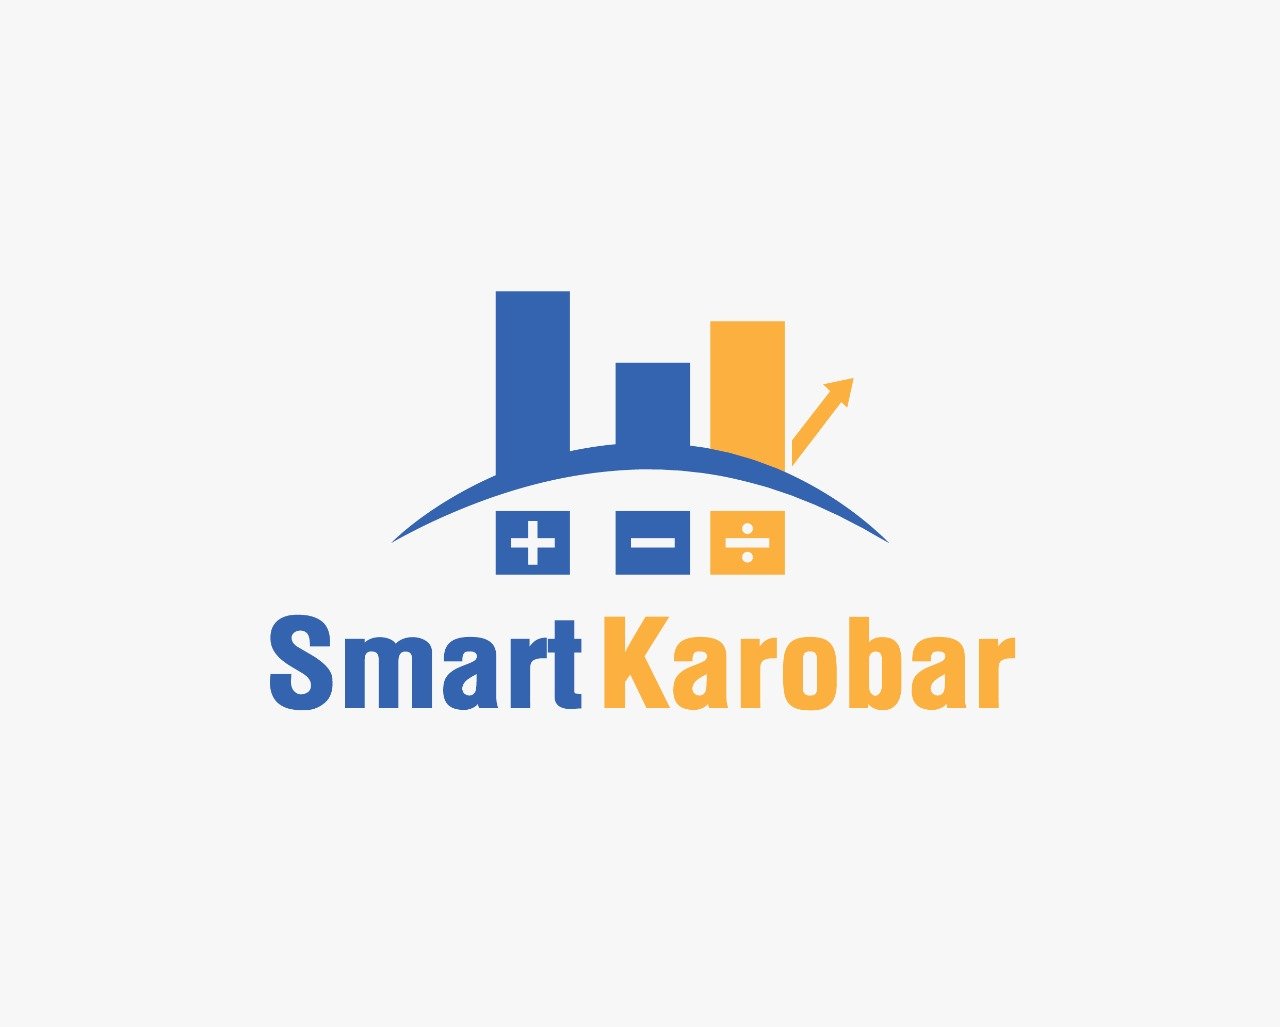 SmartKarobar